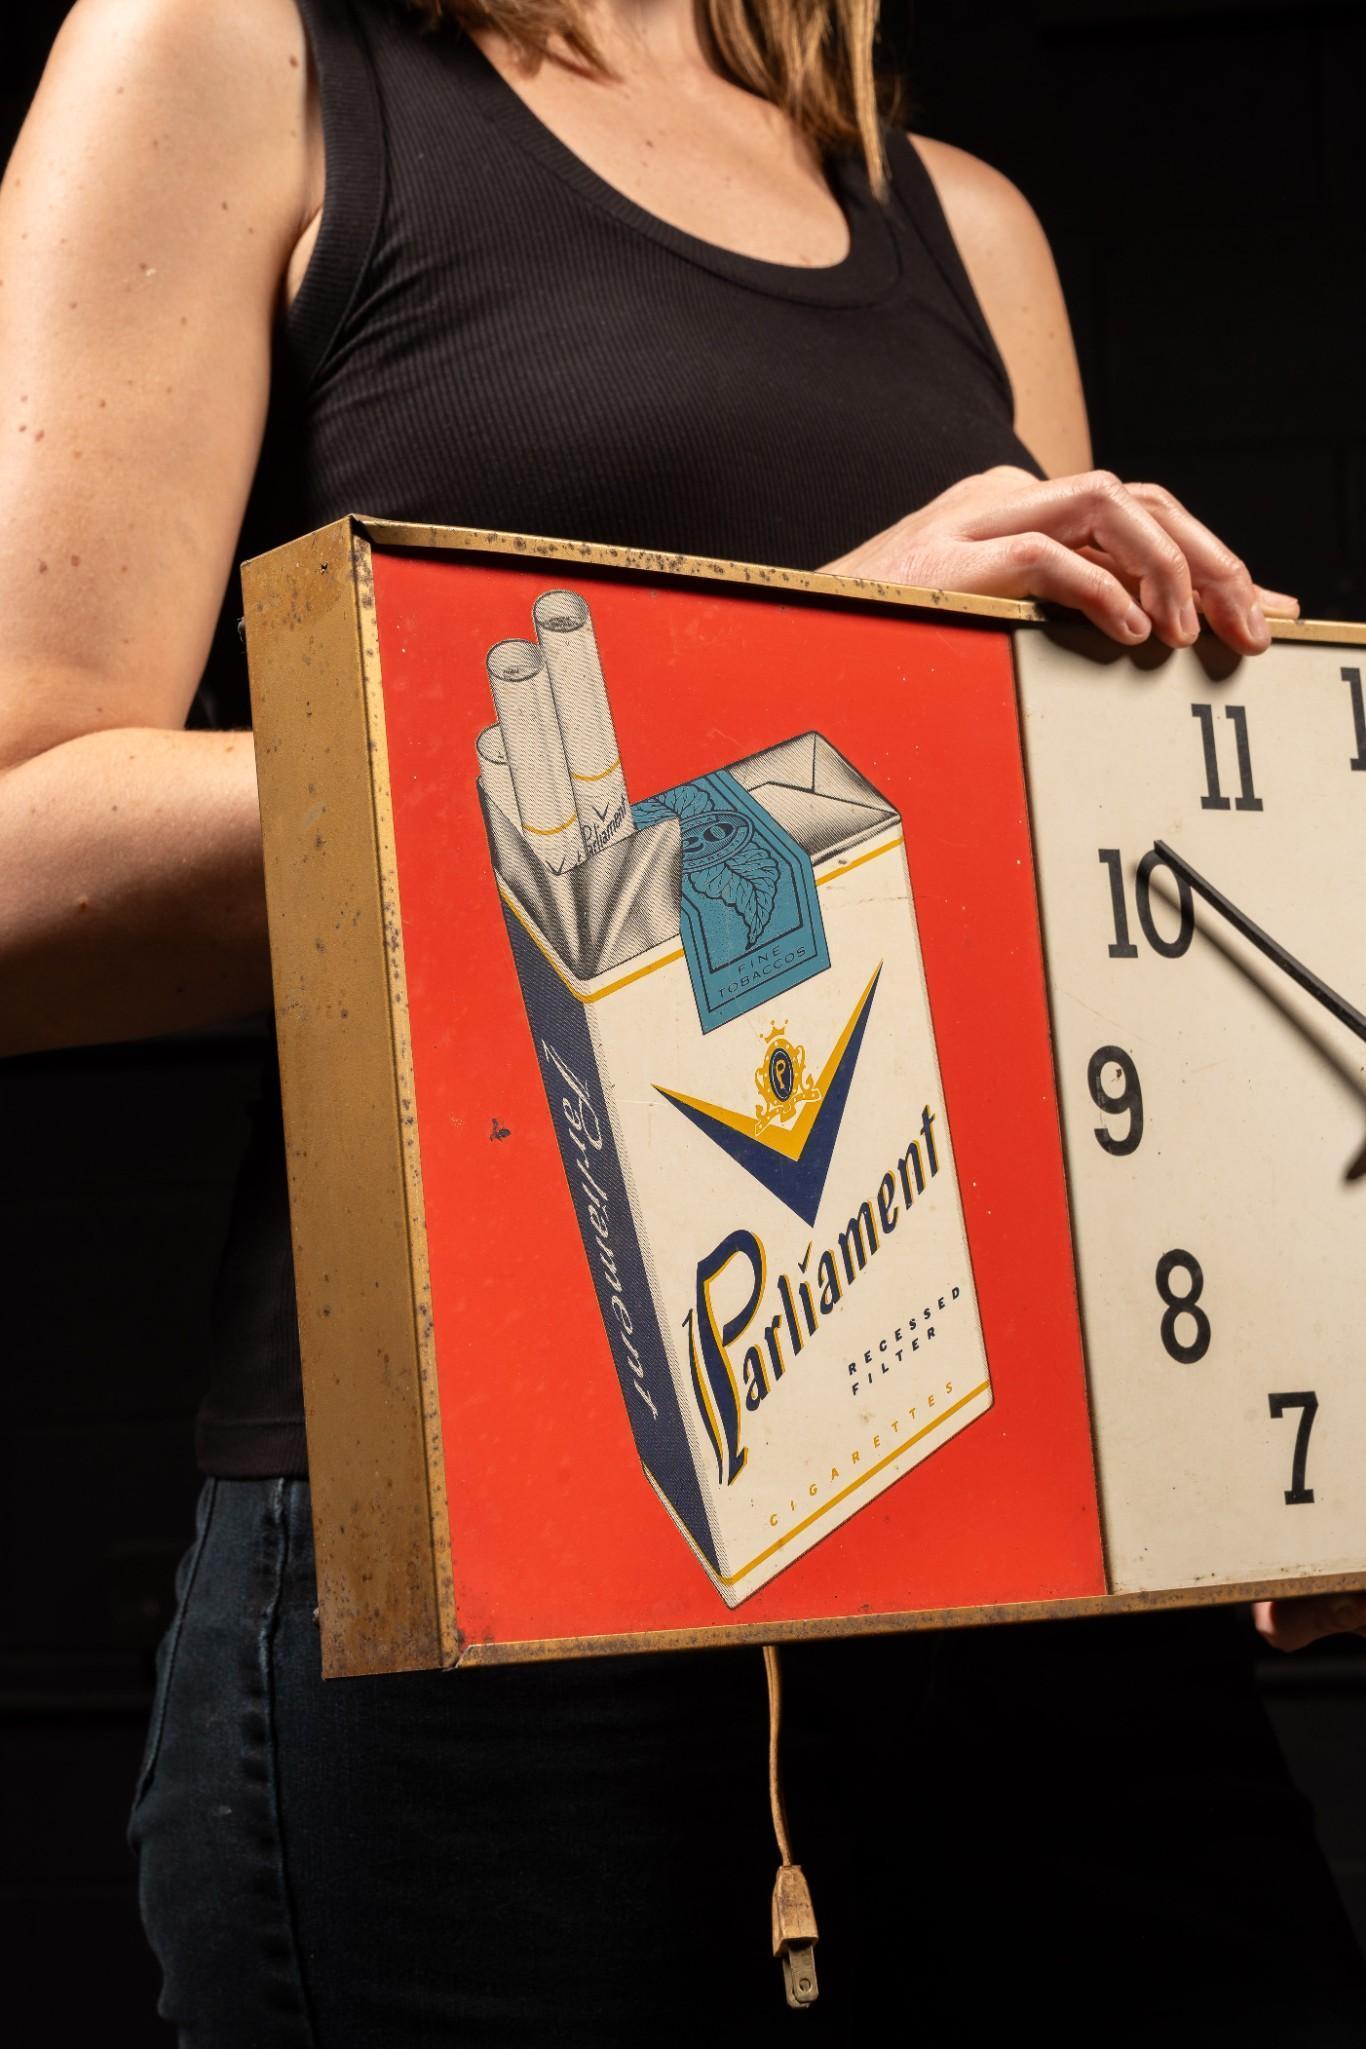 Vintage Parliament Alpine Cigarette Advertising Clock